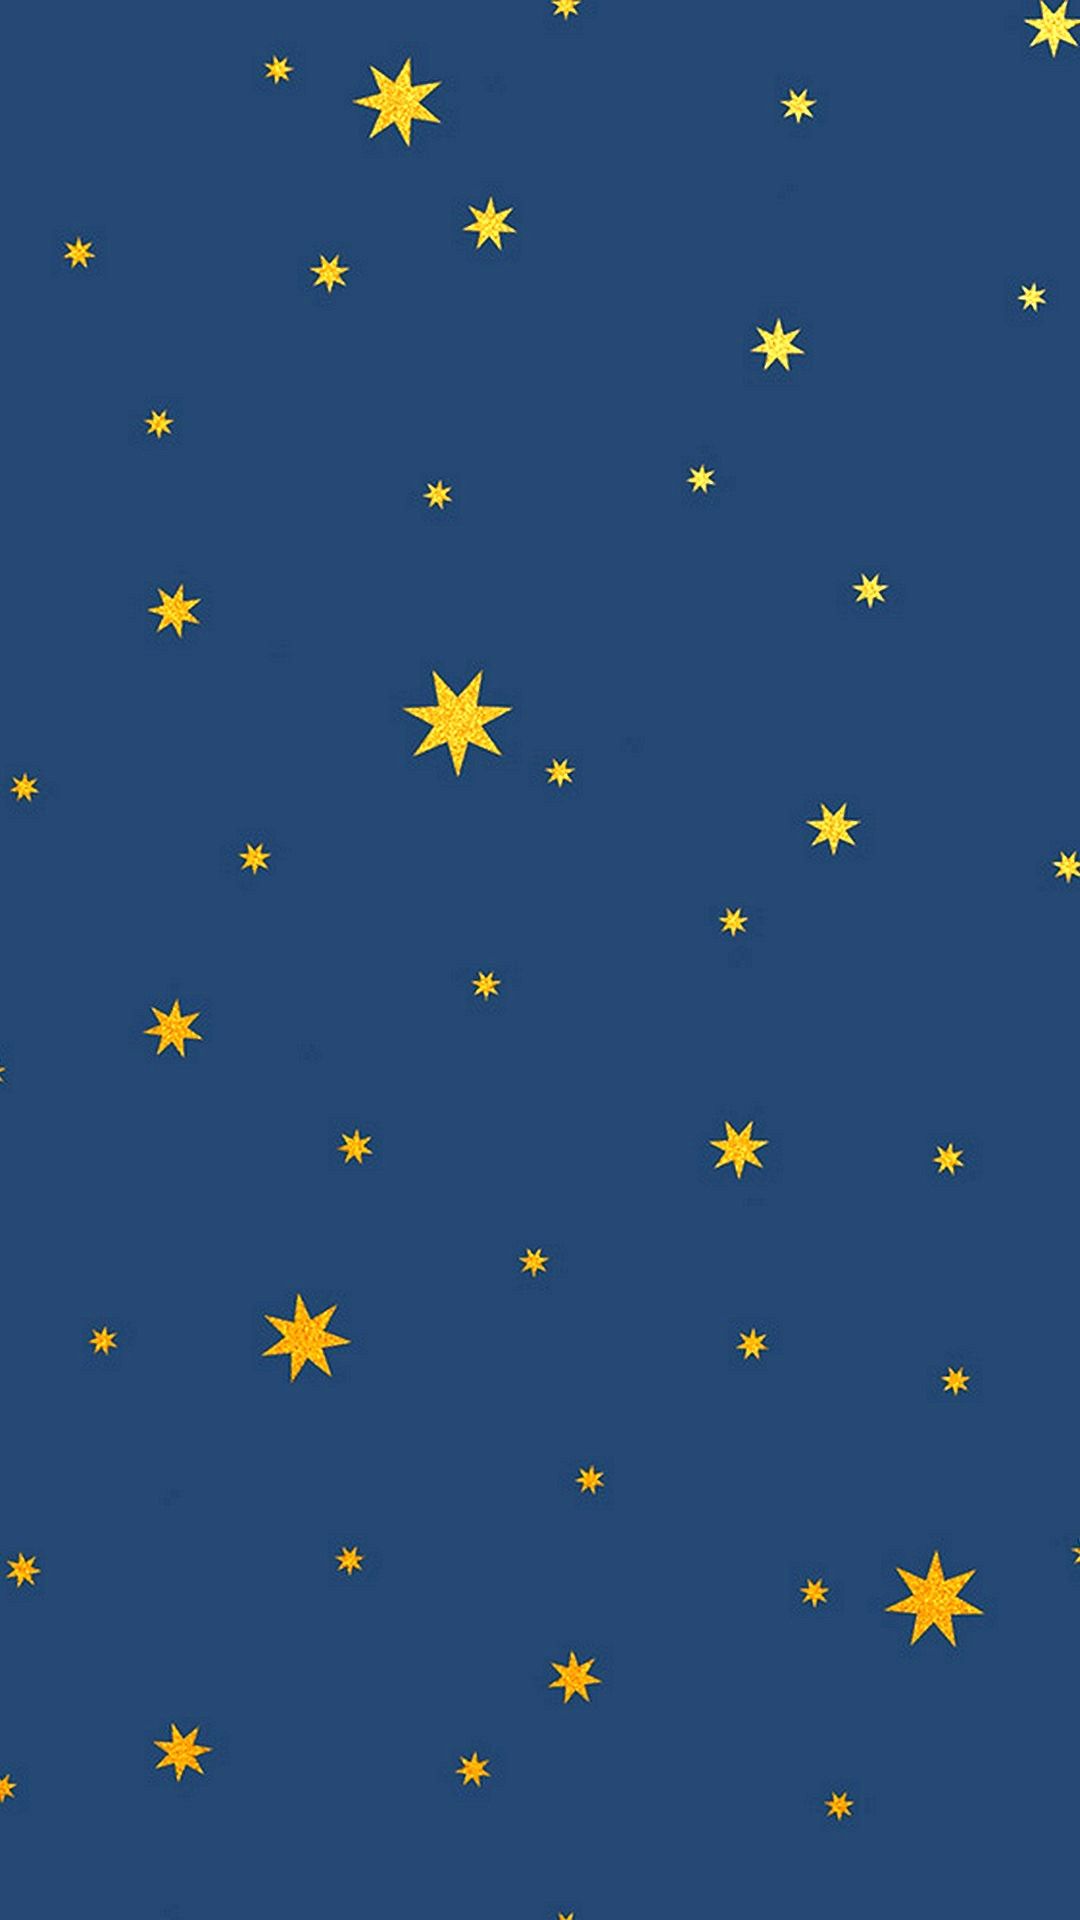 A starry night wallpaper - Stars